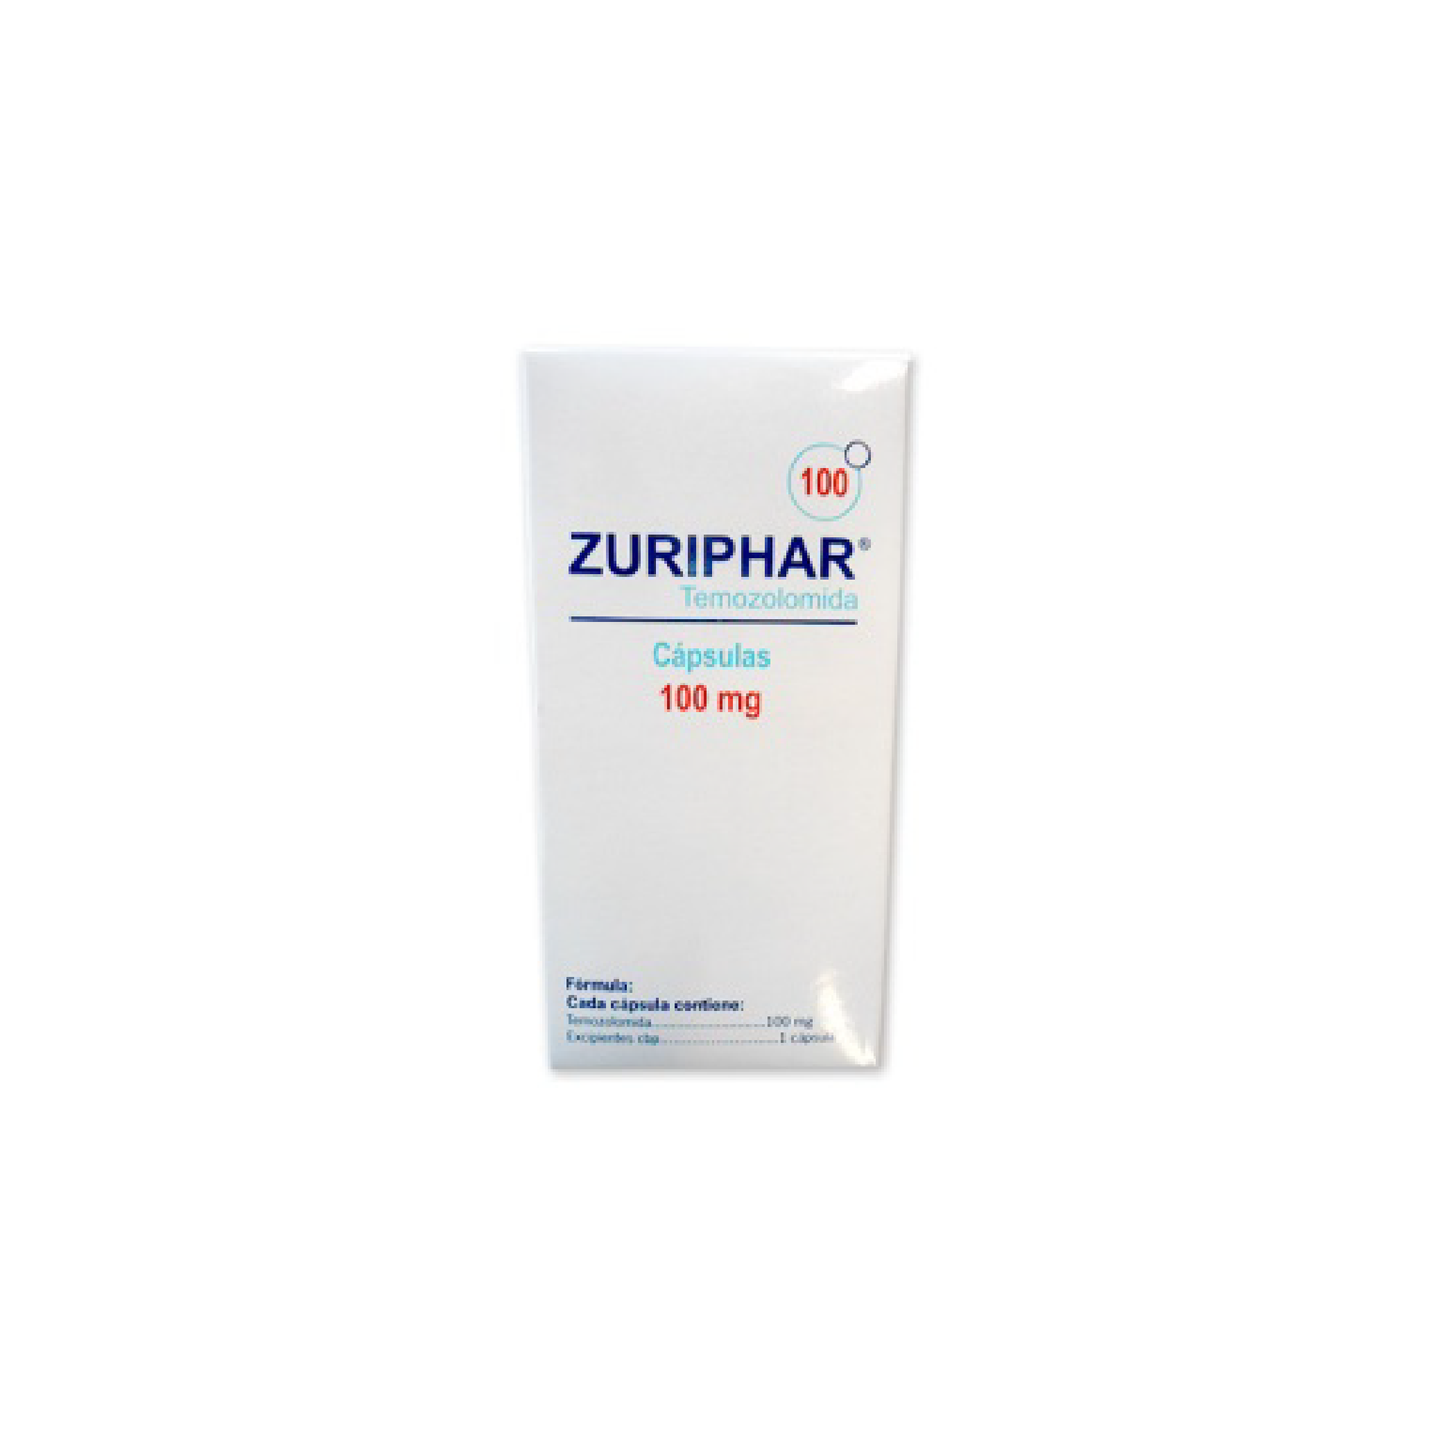 Zuriphar (Temozolomida) Caps 100 mg Cja fco c/5 caps